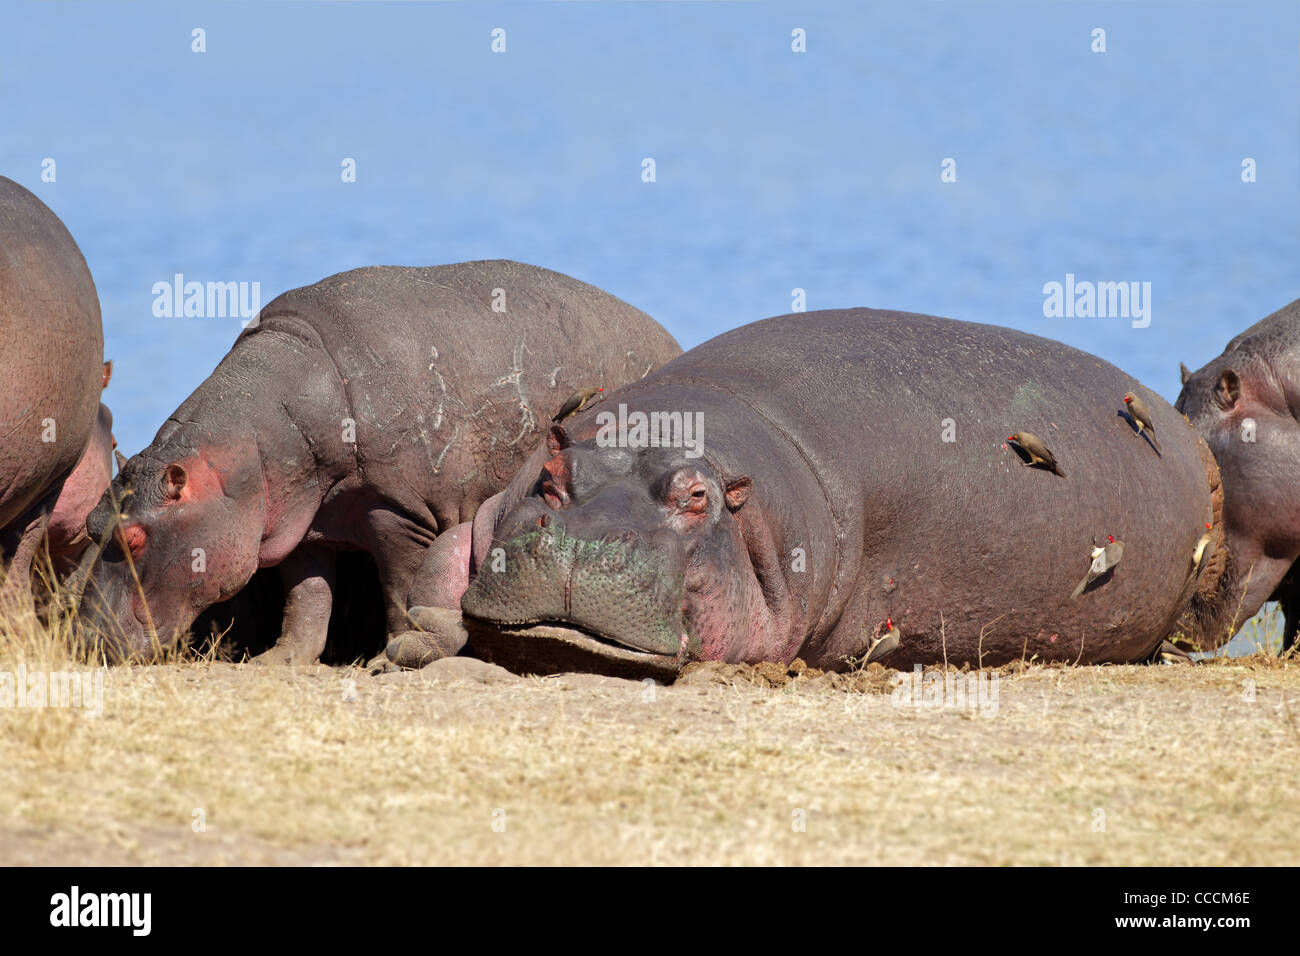 Hippos (Hippopotamus amphibius) with oxpecker birds, Sabie-Sand nature reserve, South Africa Stock Photo